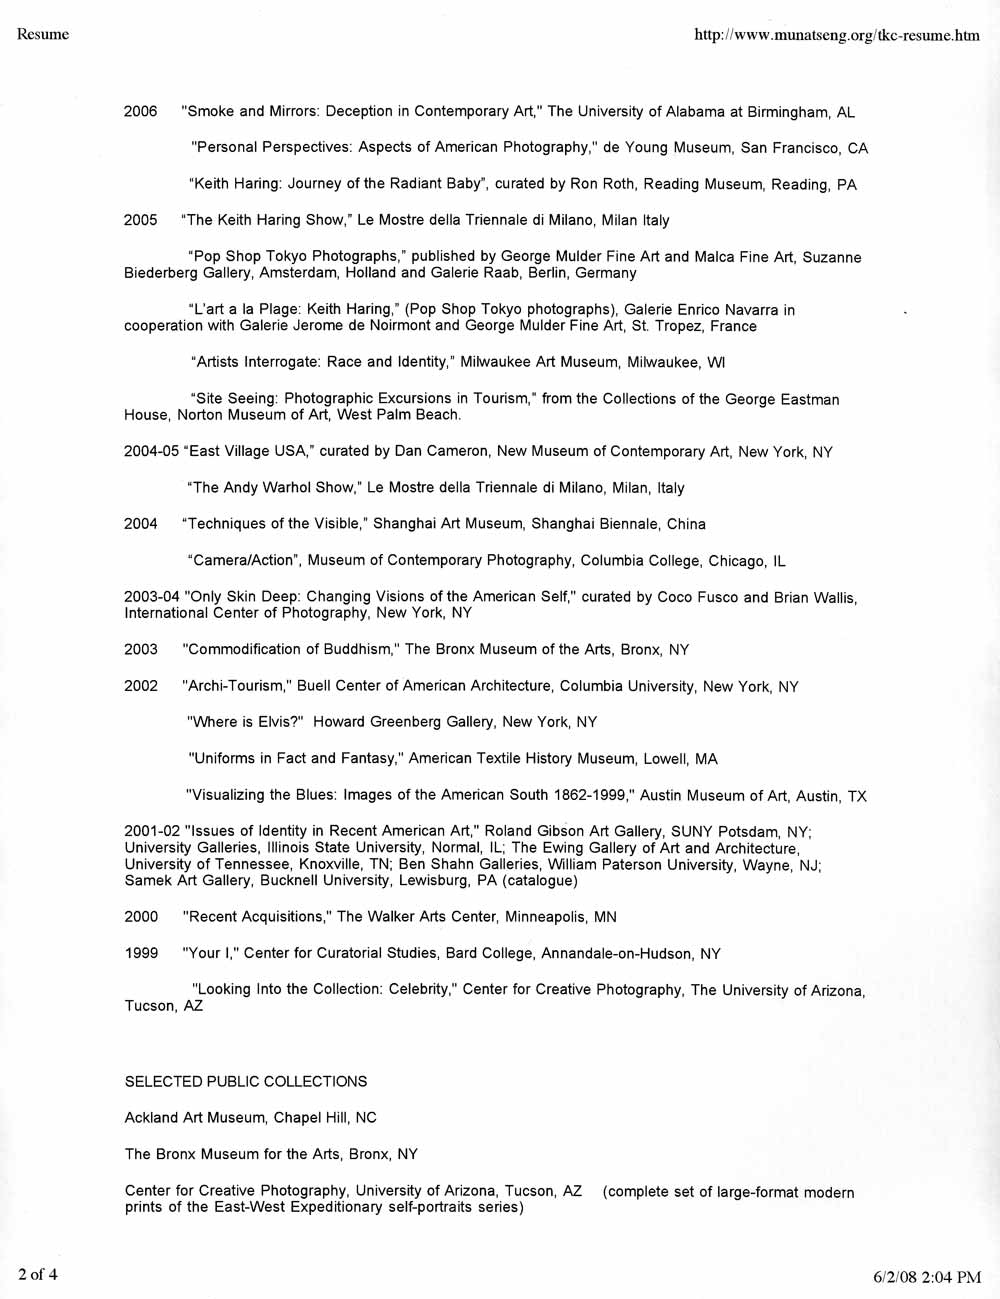 Tseng Kwong Chi's Resume, pg 2